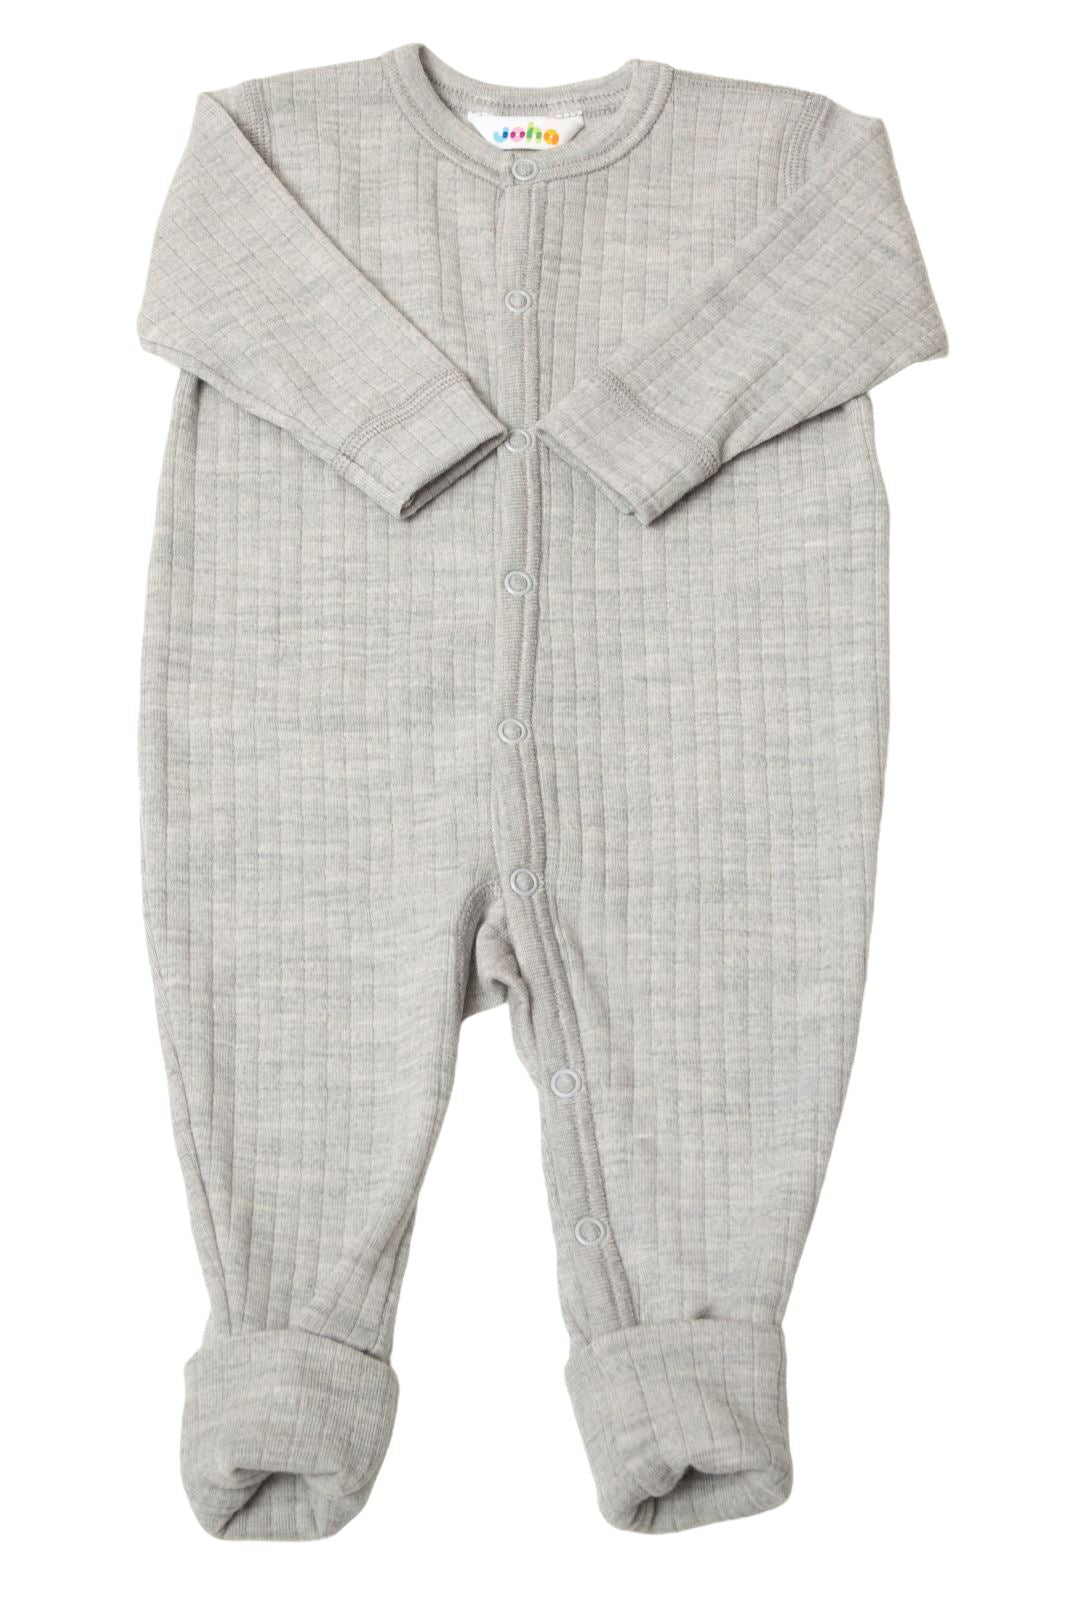 Joha - Nightsuit 2in1 foot - Light Grey Melange Bodysuits 